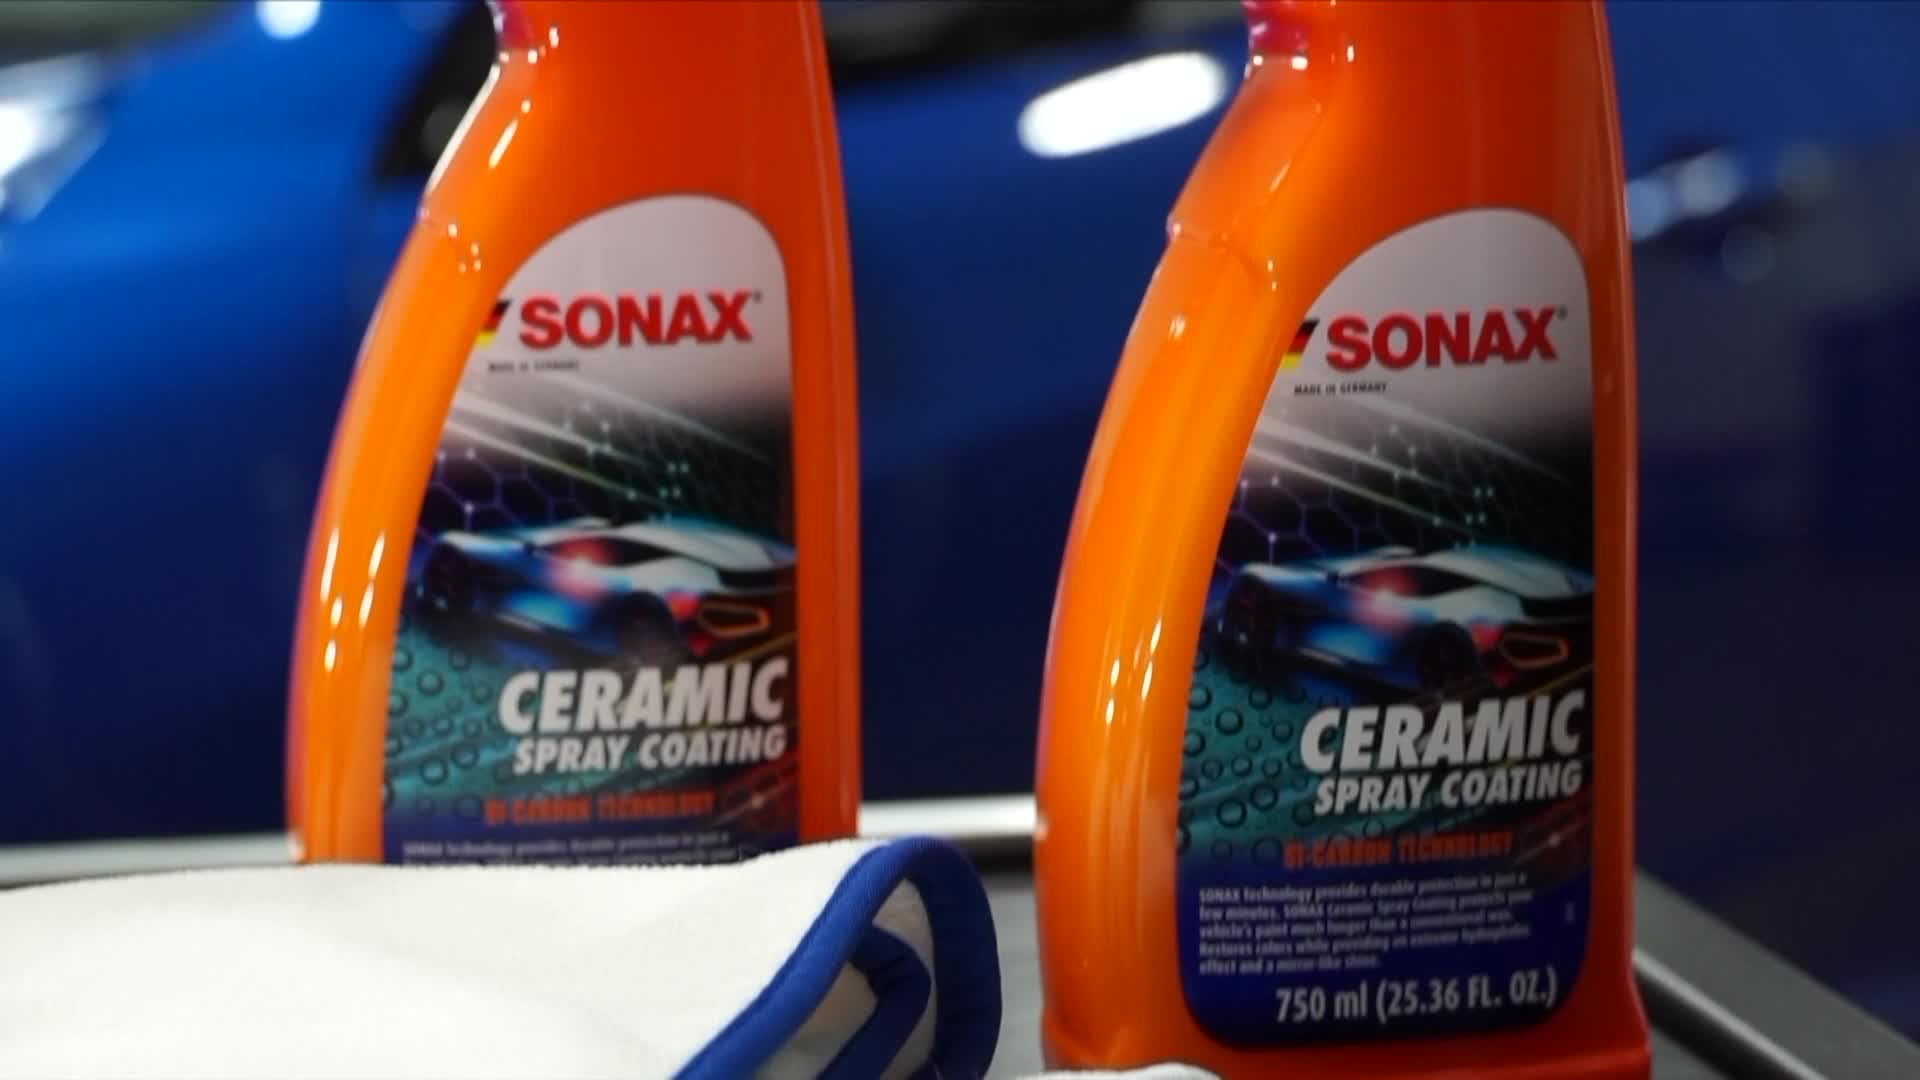 Sonax Ceramic Spray Coating